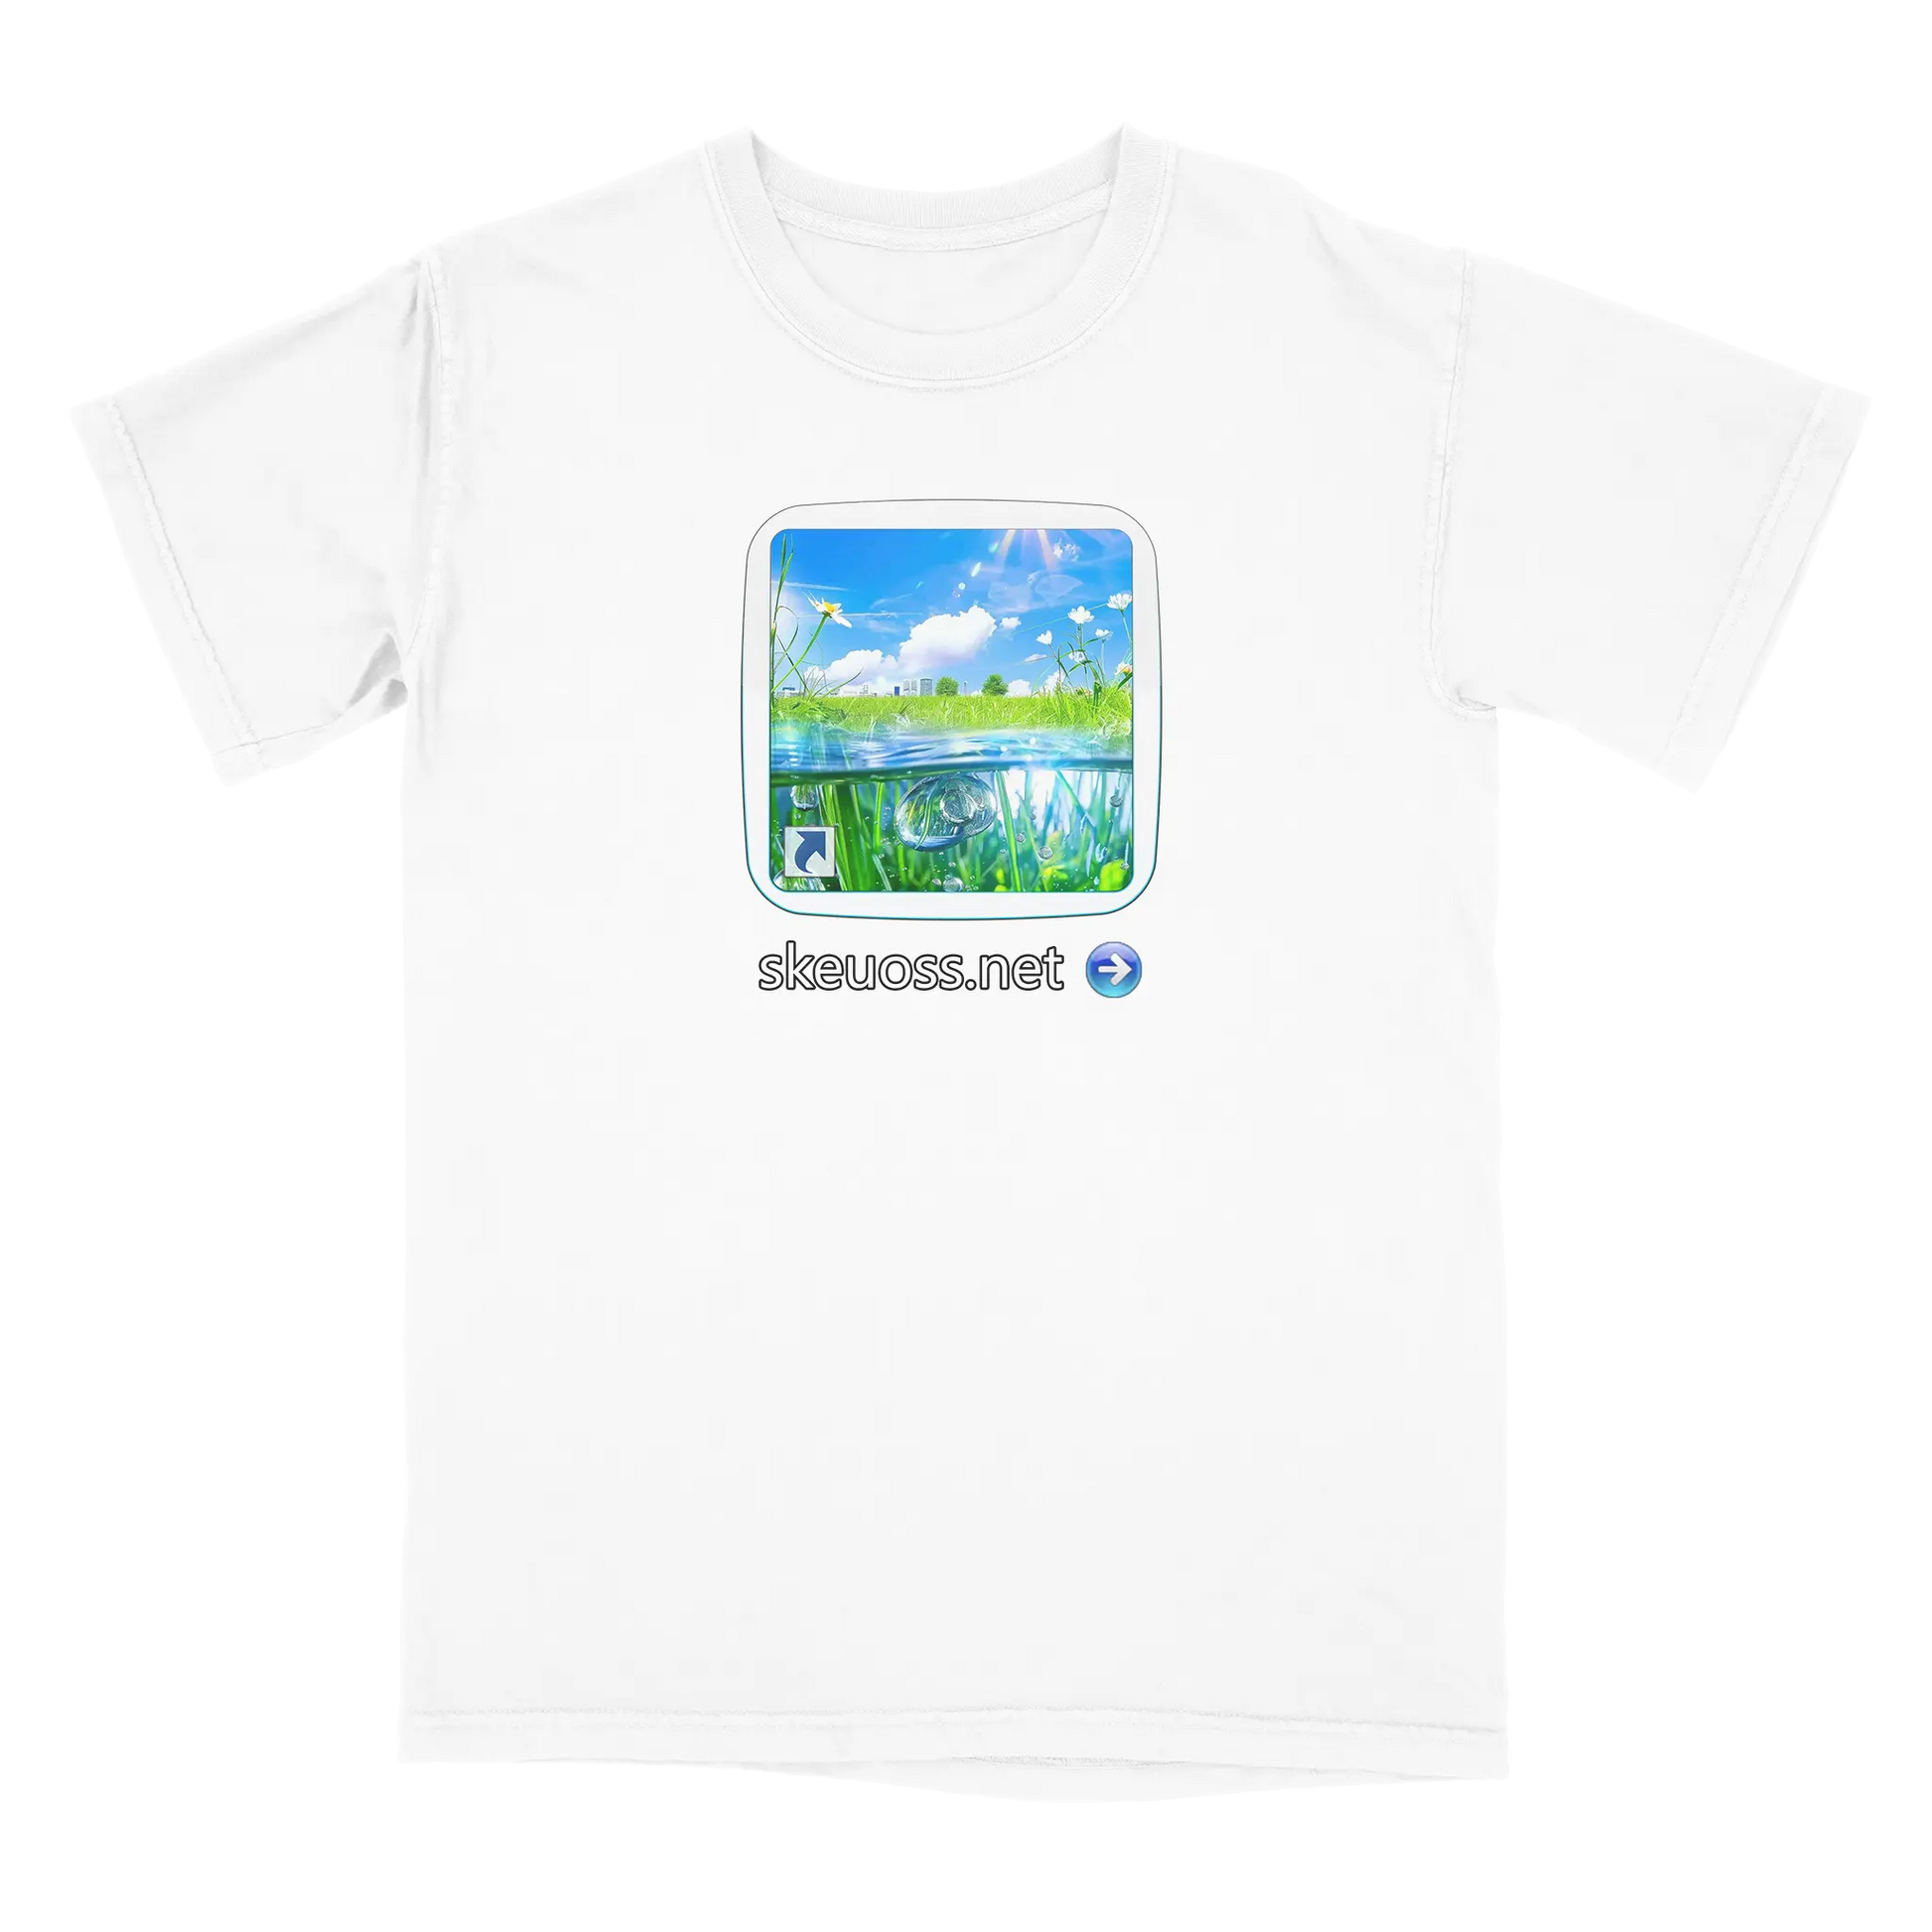 Frutiger Aero T-shirt - User Login Collection - User 194